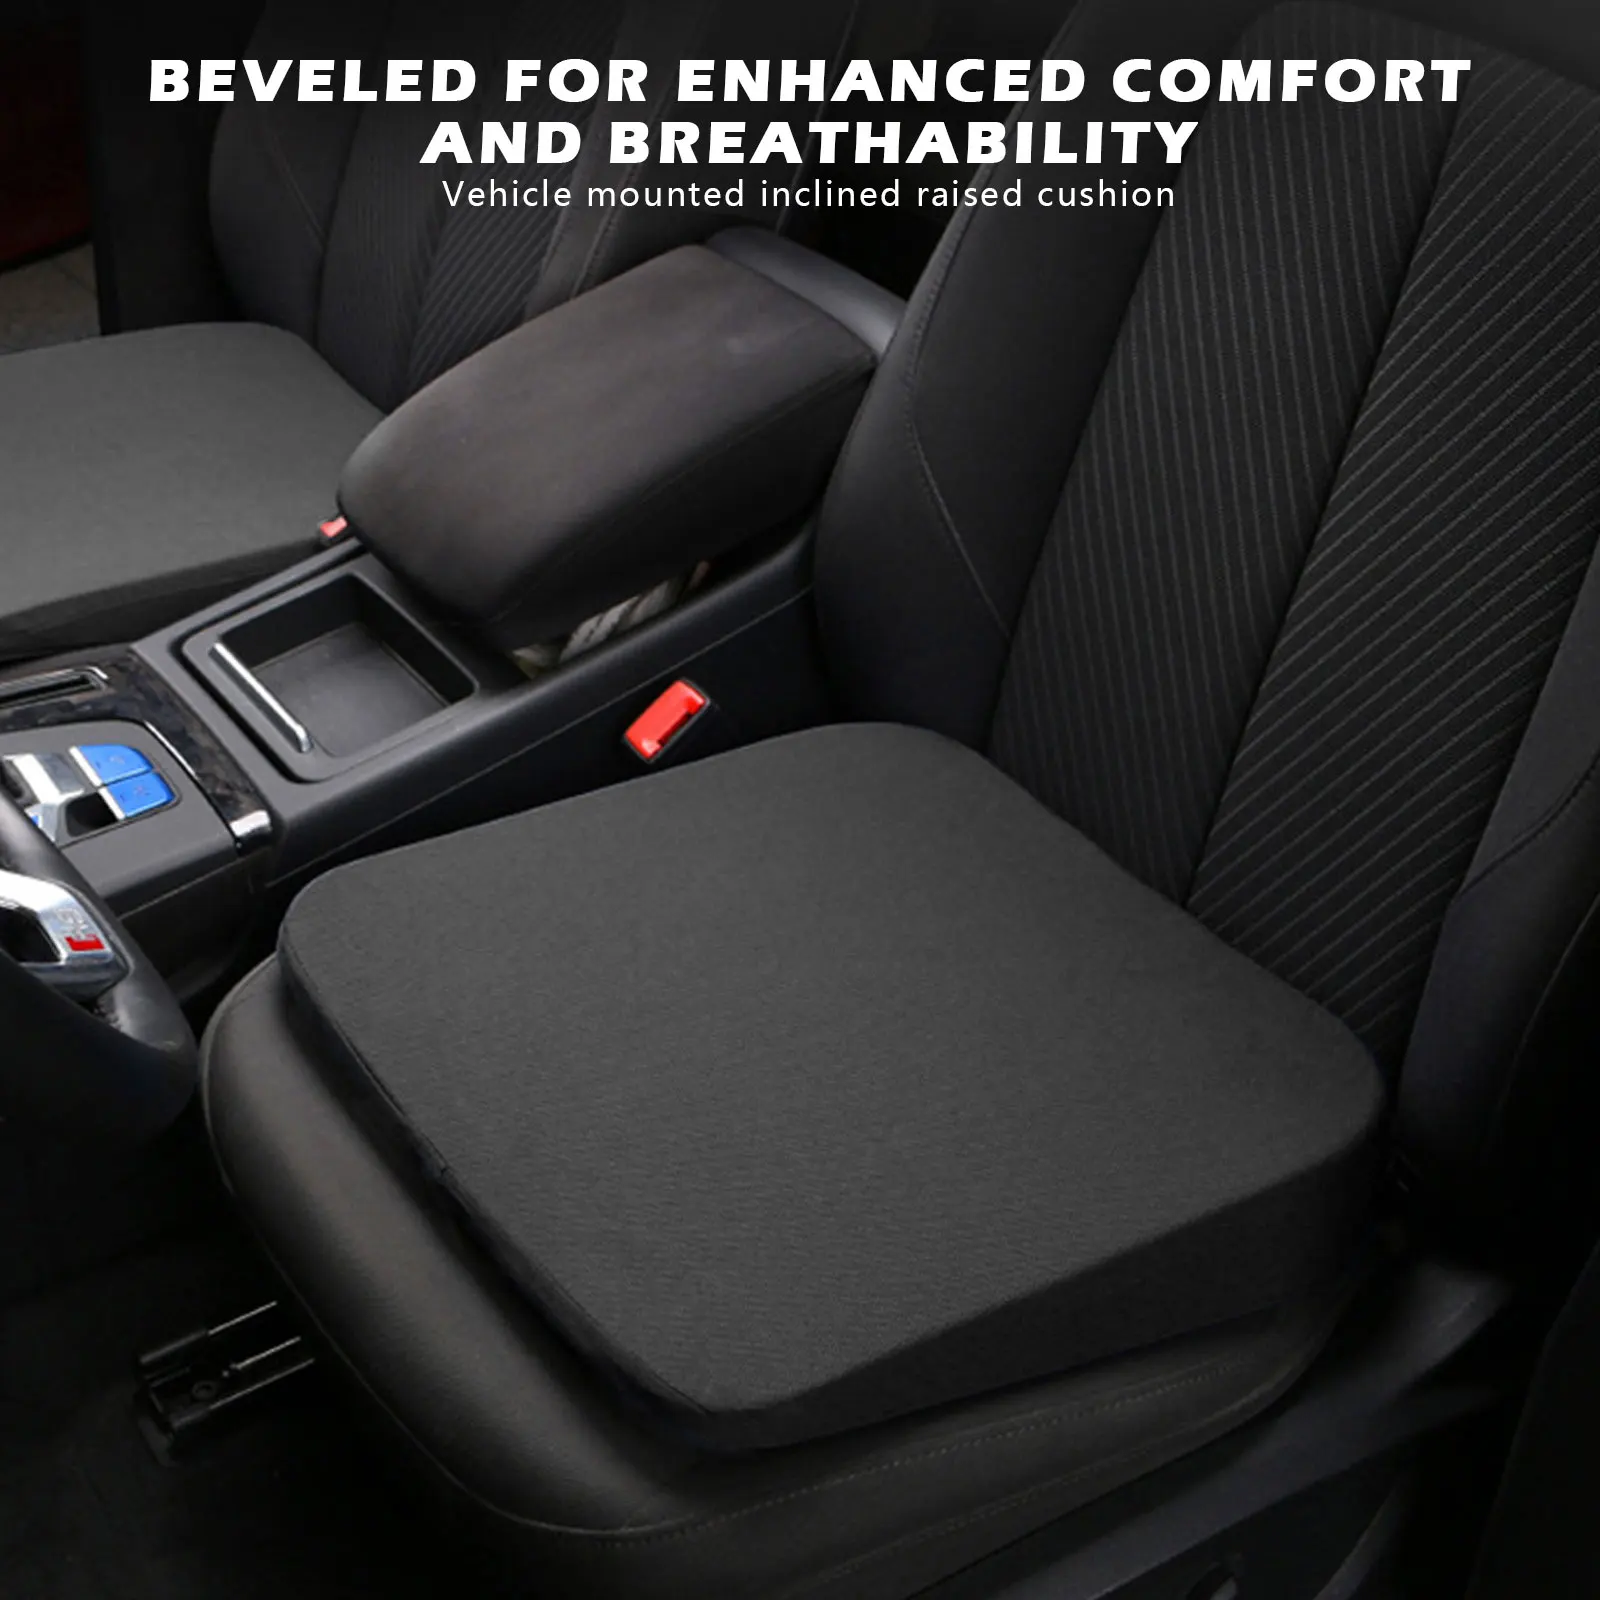 https://ae01.alicdn.com/kf/Sd9044d2bbbc441cdbe73a6948f5a1407T/Car-Seat-Heightening-Cushion-Bevel-Main-Driver-Single-Seat-Thickening-Butt-Cushion-Heightening-Mats-Auto-Interior.jpg